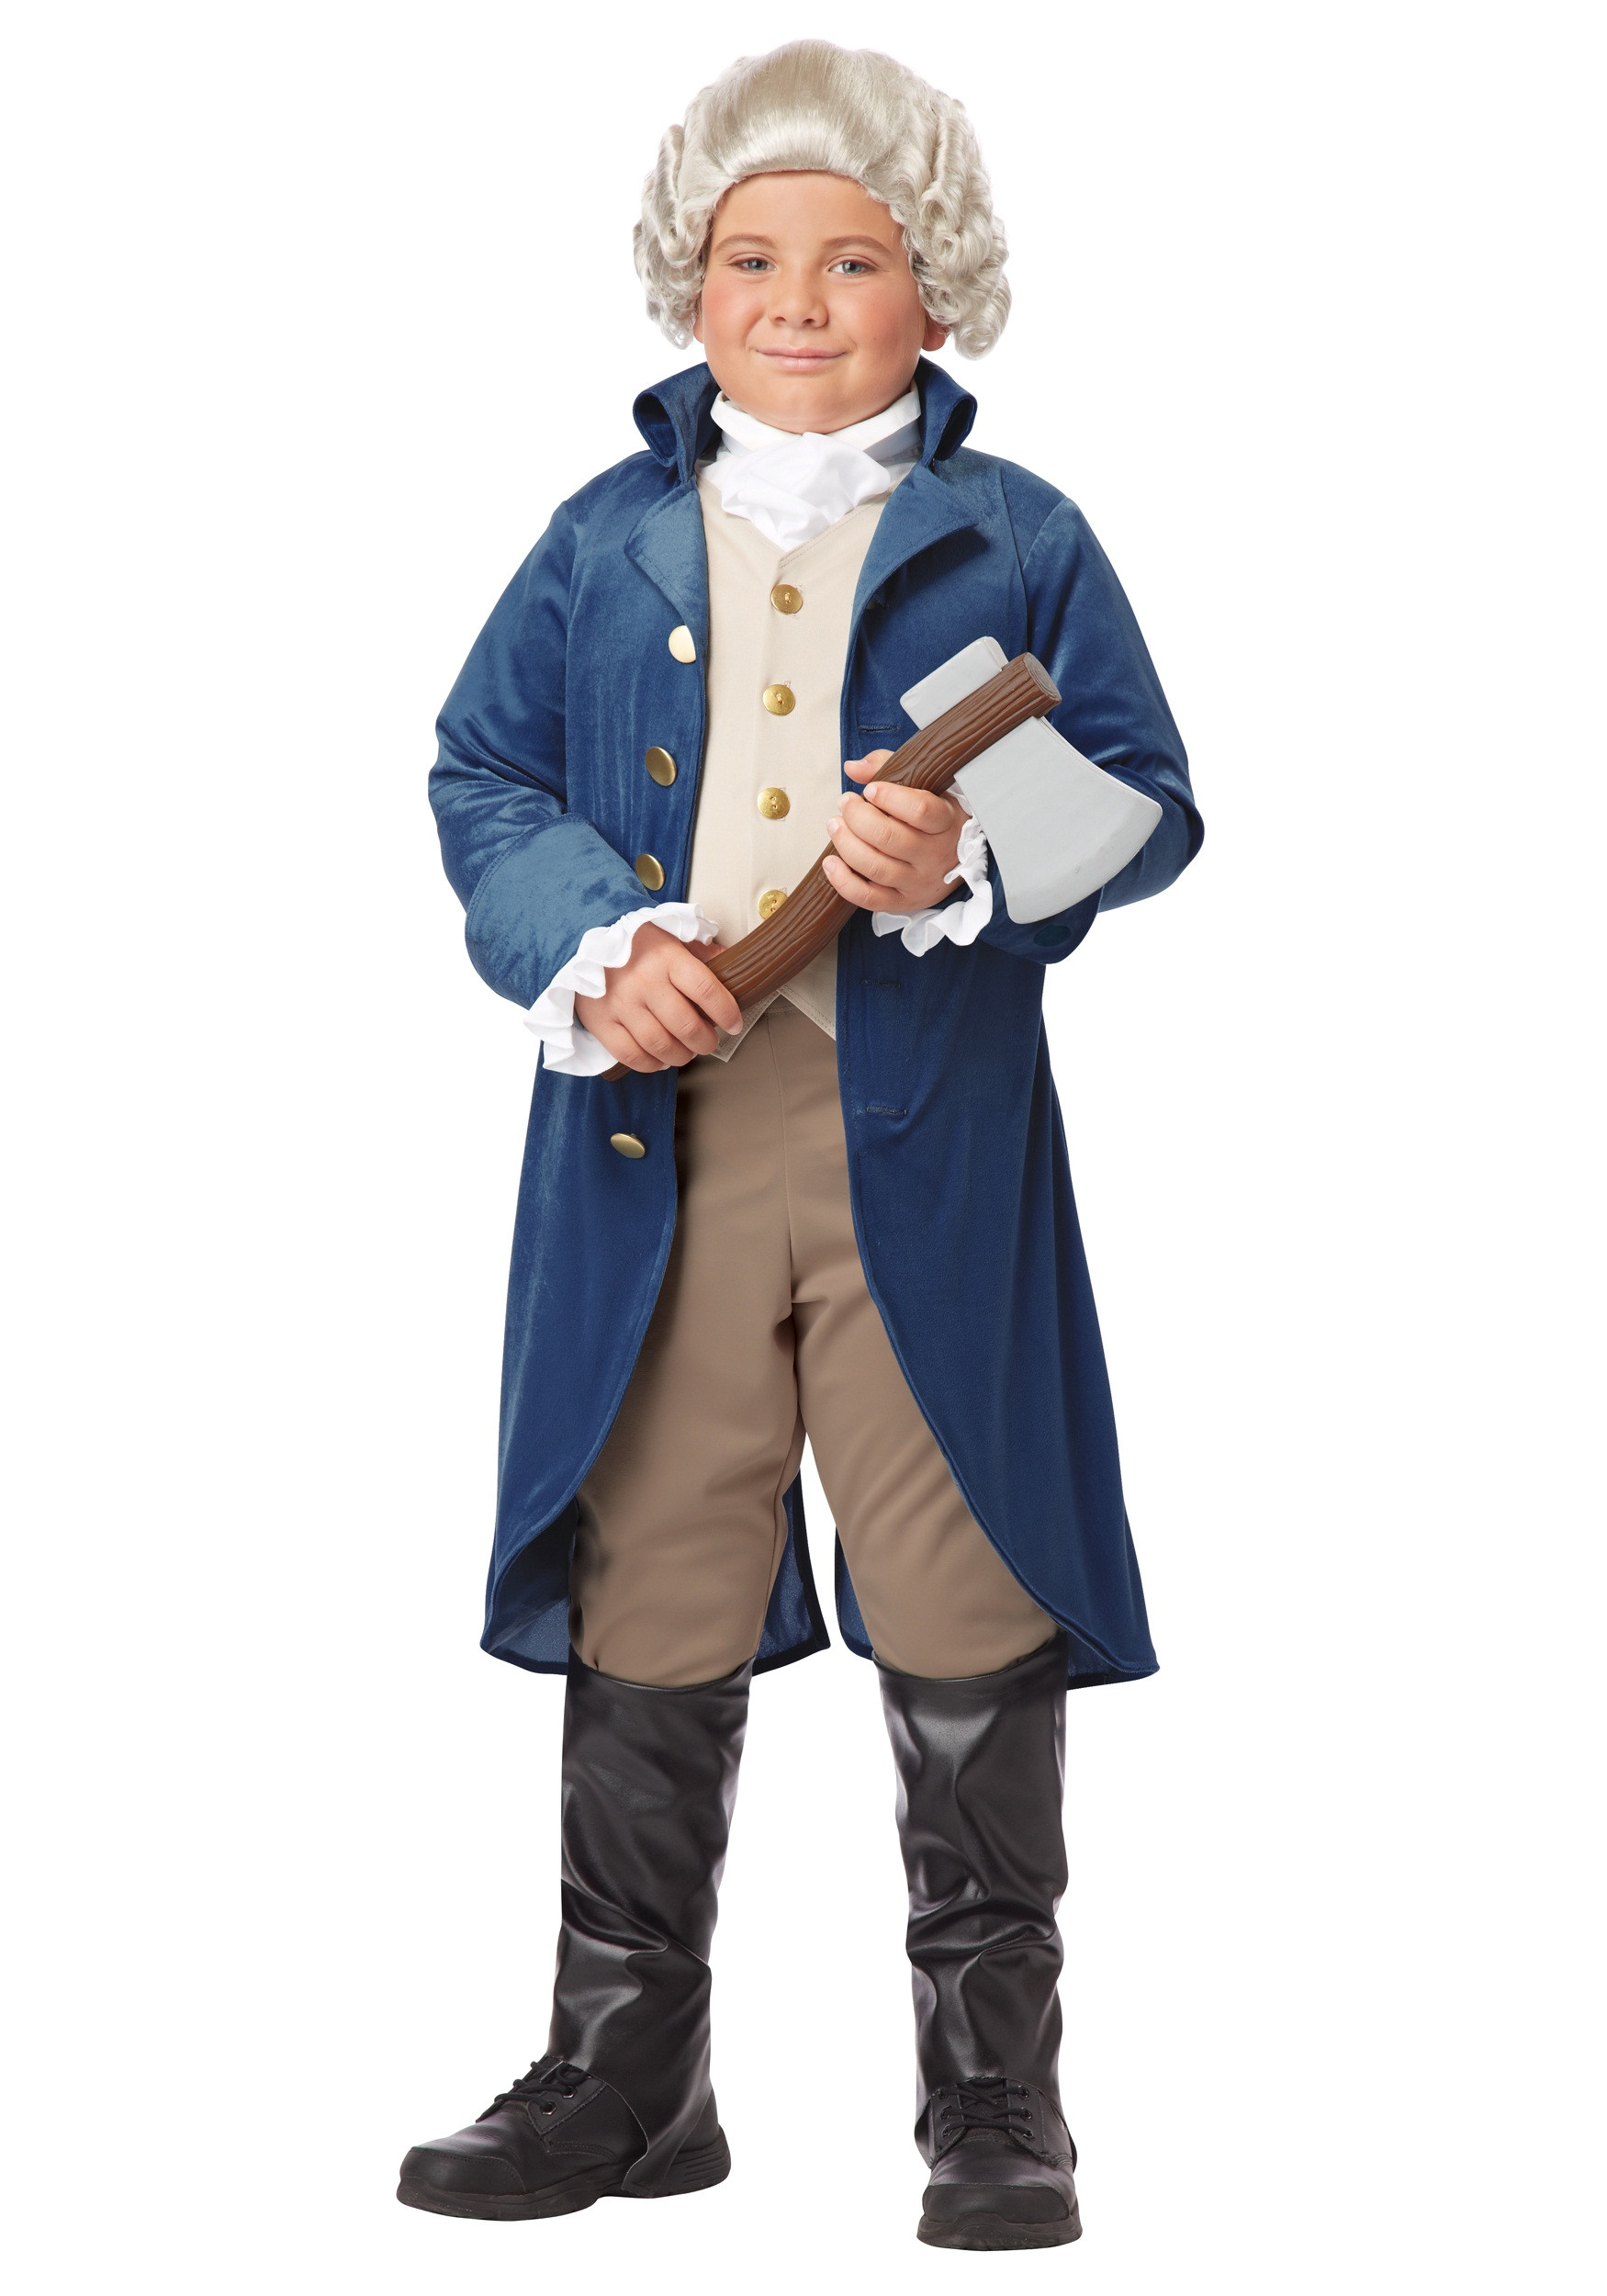 Best ideas about Thomas Jefferson Costume DIY
. Save or Pin Boys George Washington Costume Now.